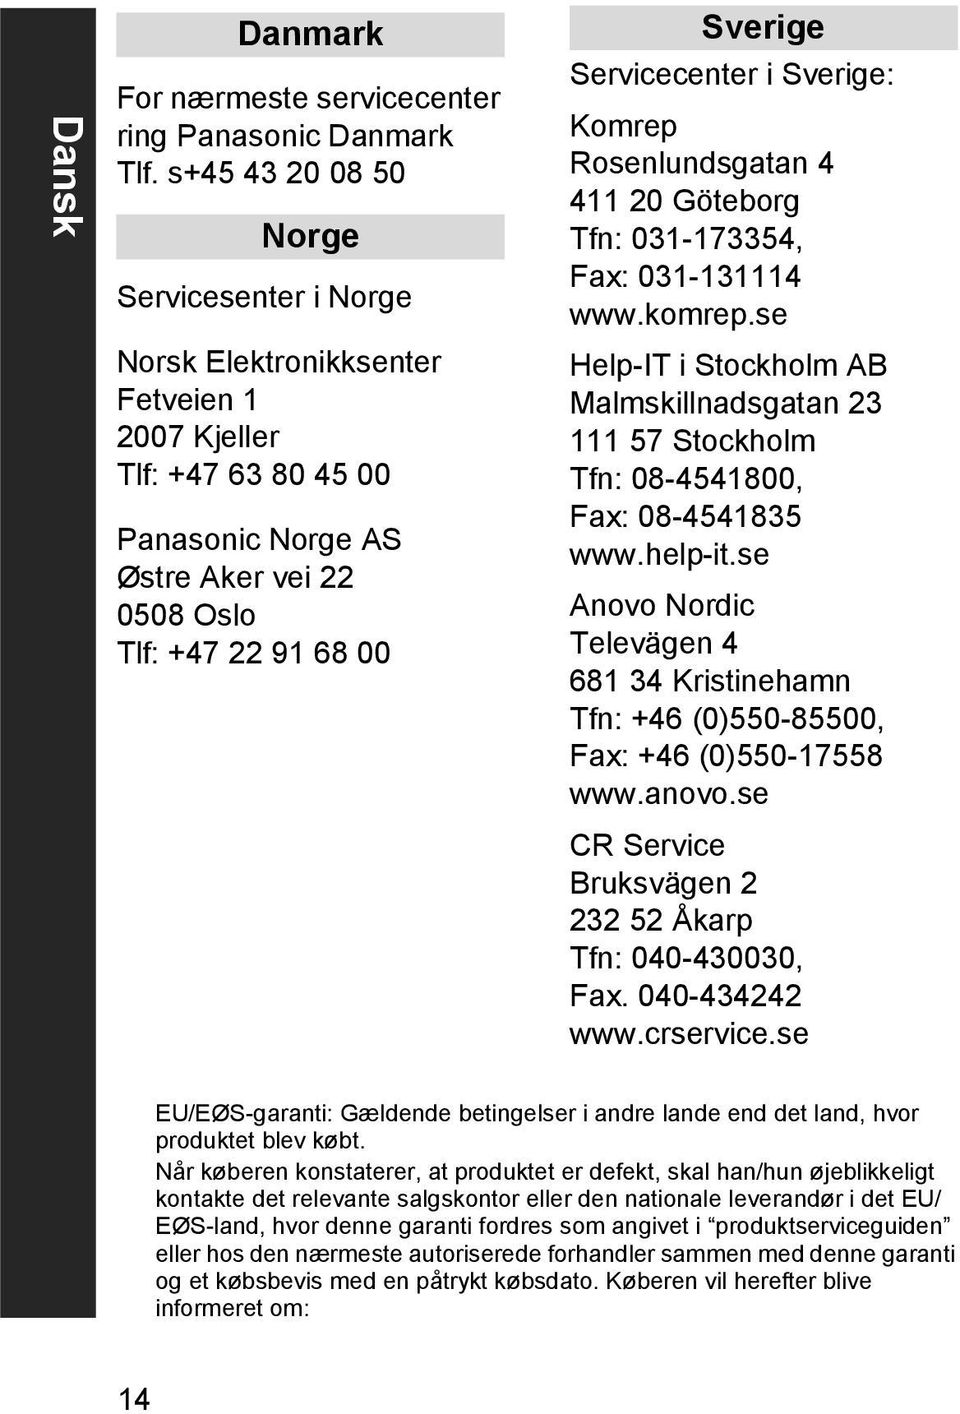 Servicecenter i Sverige: Komrep Rosenlundsgatan 4 411 20 Göteborg Tfn: 031-173354, Fax: 031-131114 www.komrep.